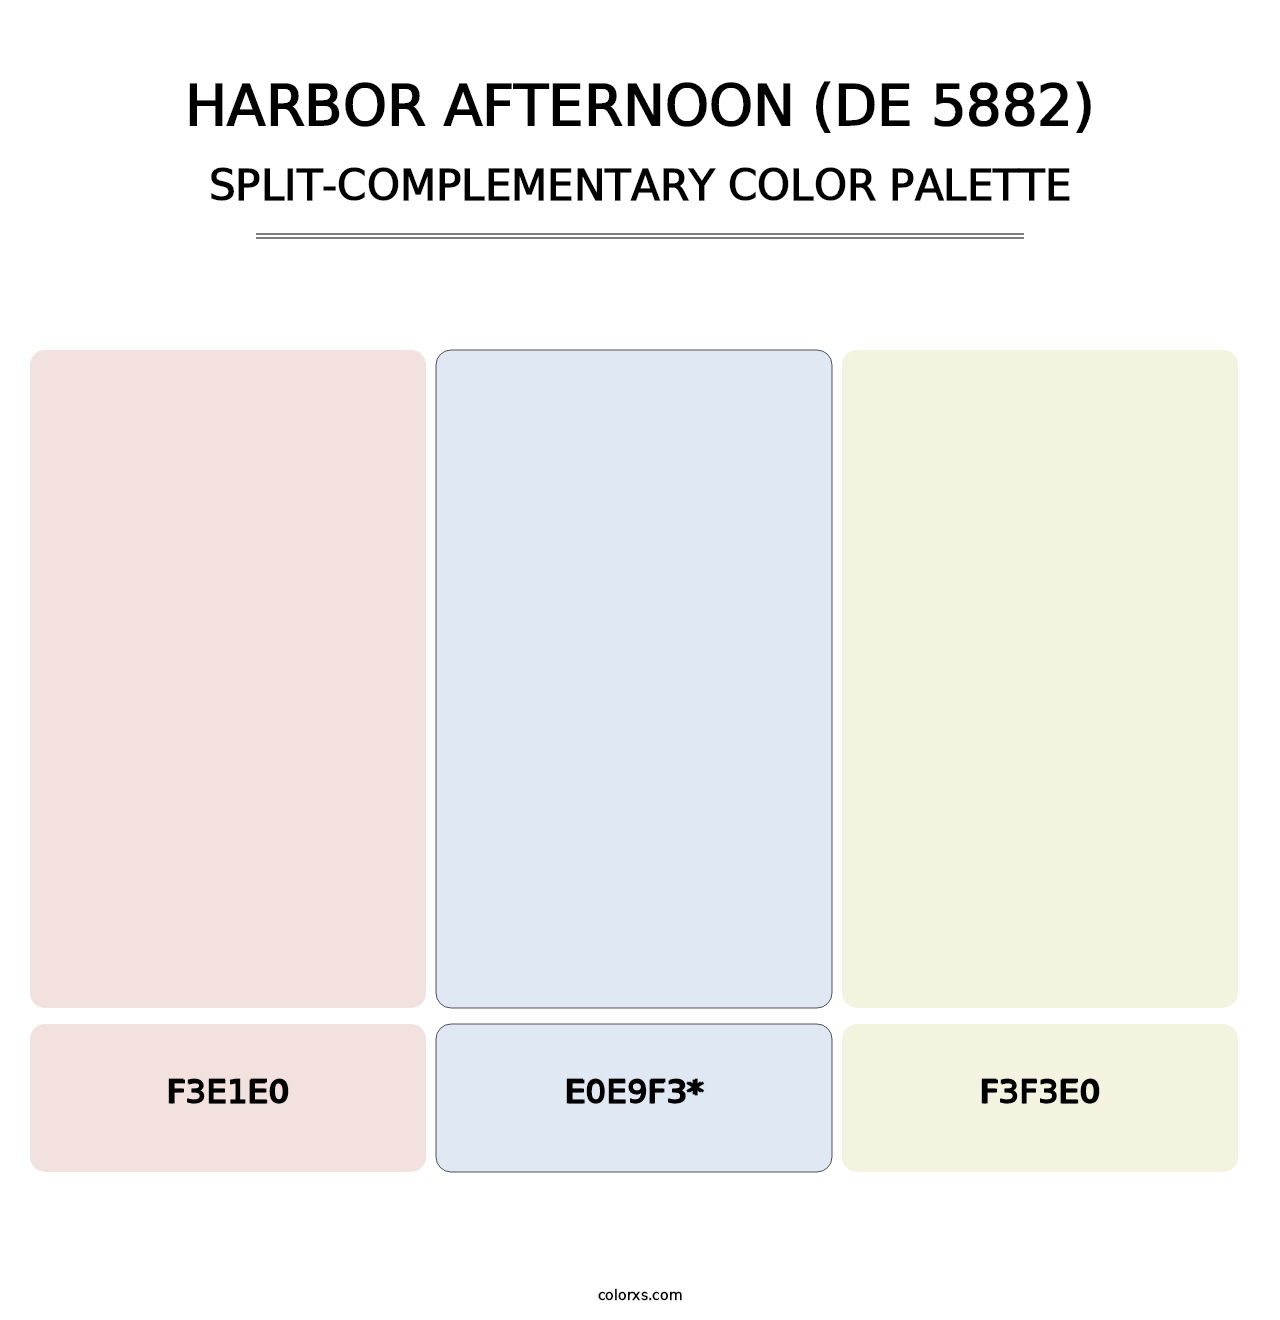 Harbor Afternoon (DE 5882) - Split-Complementary Color Palette